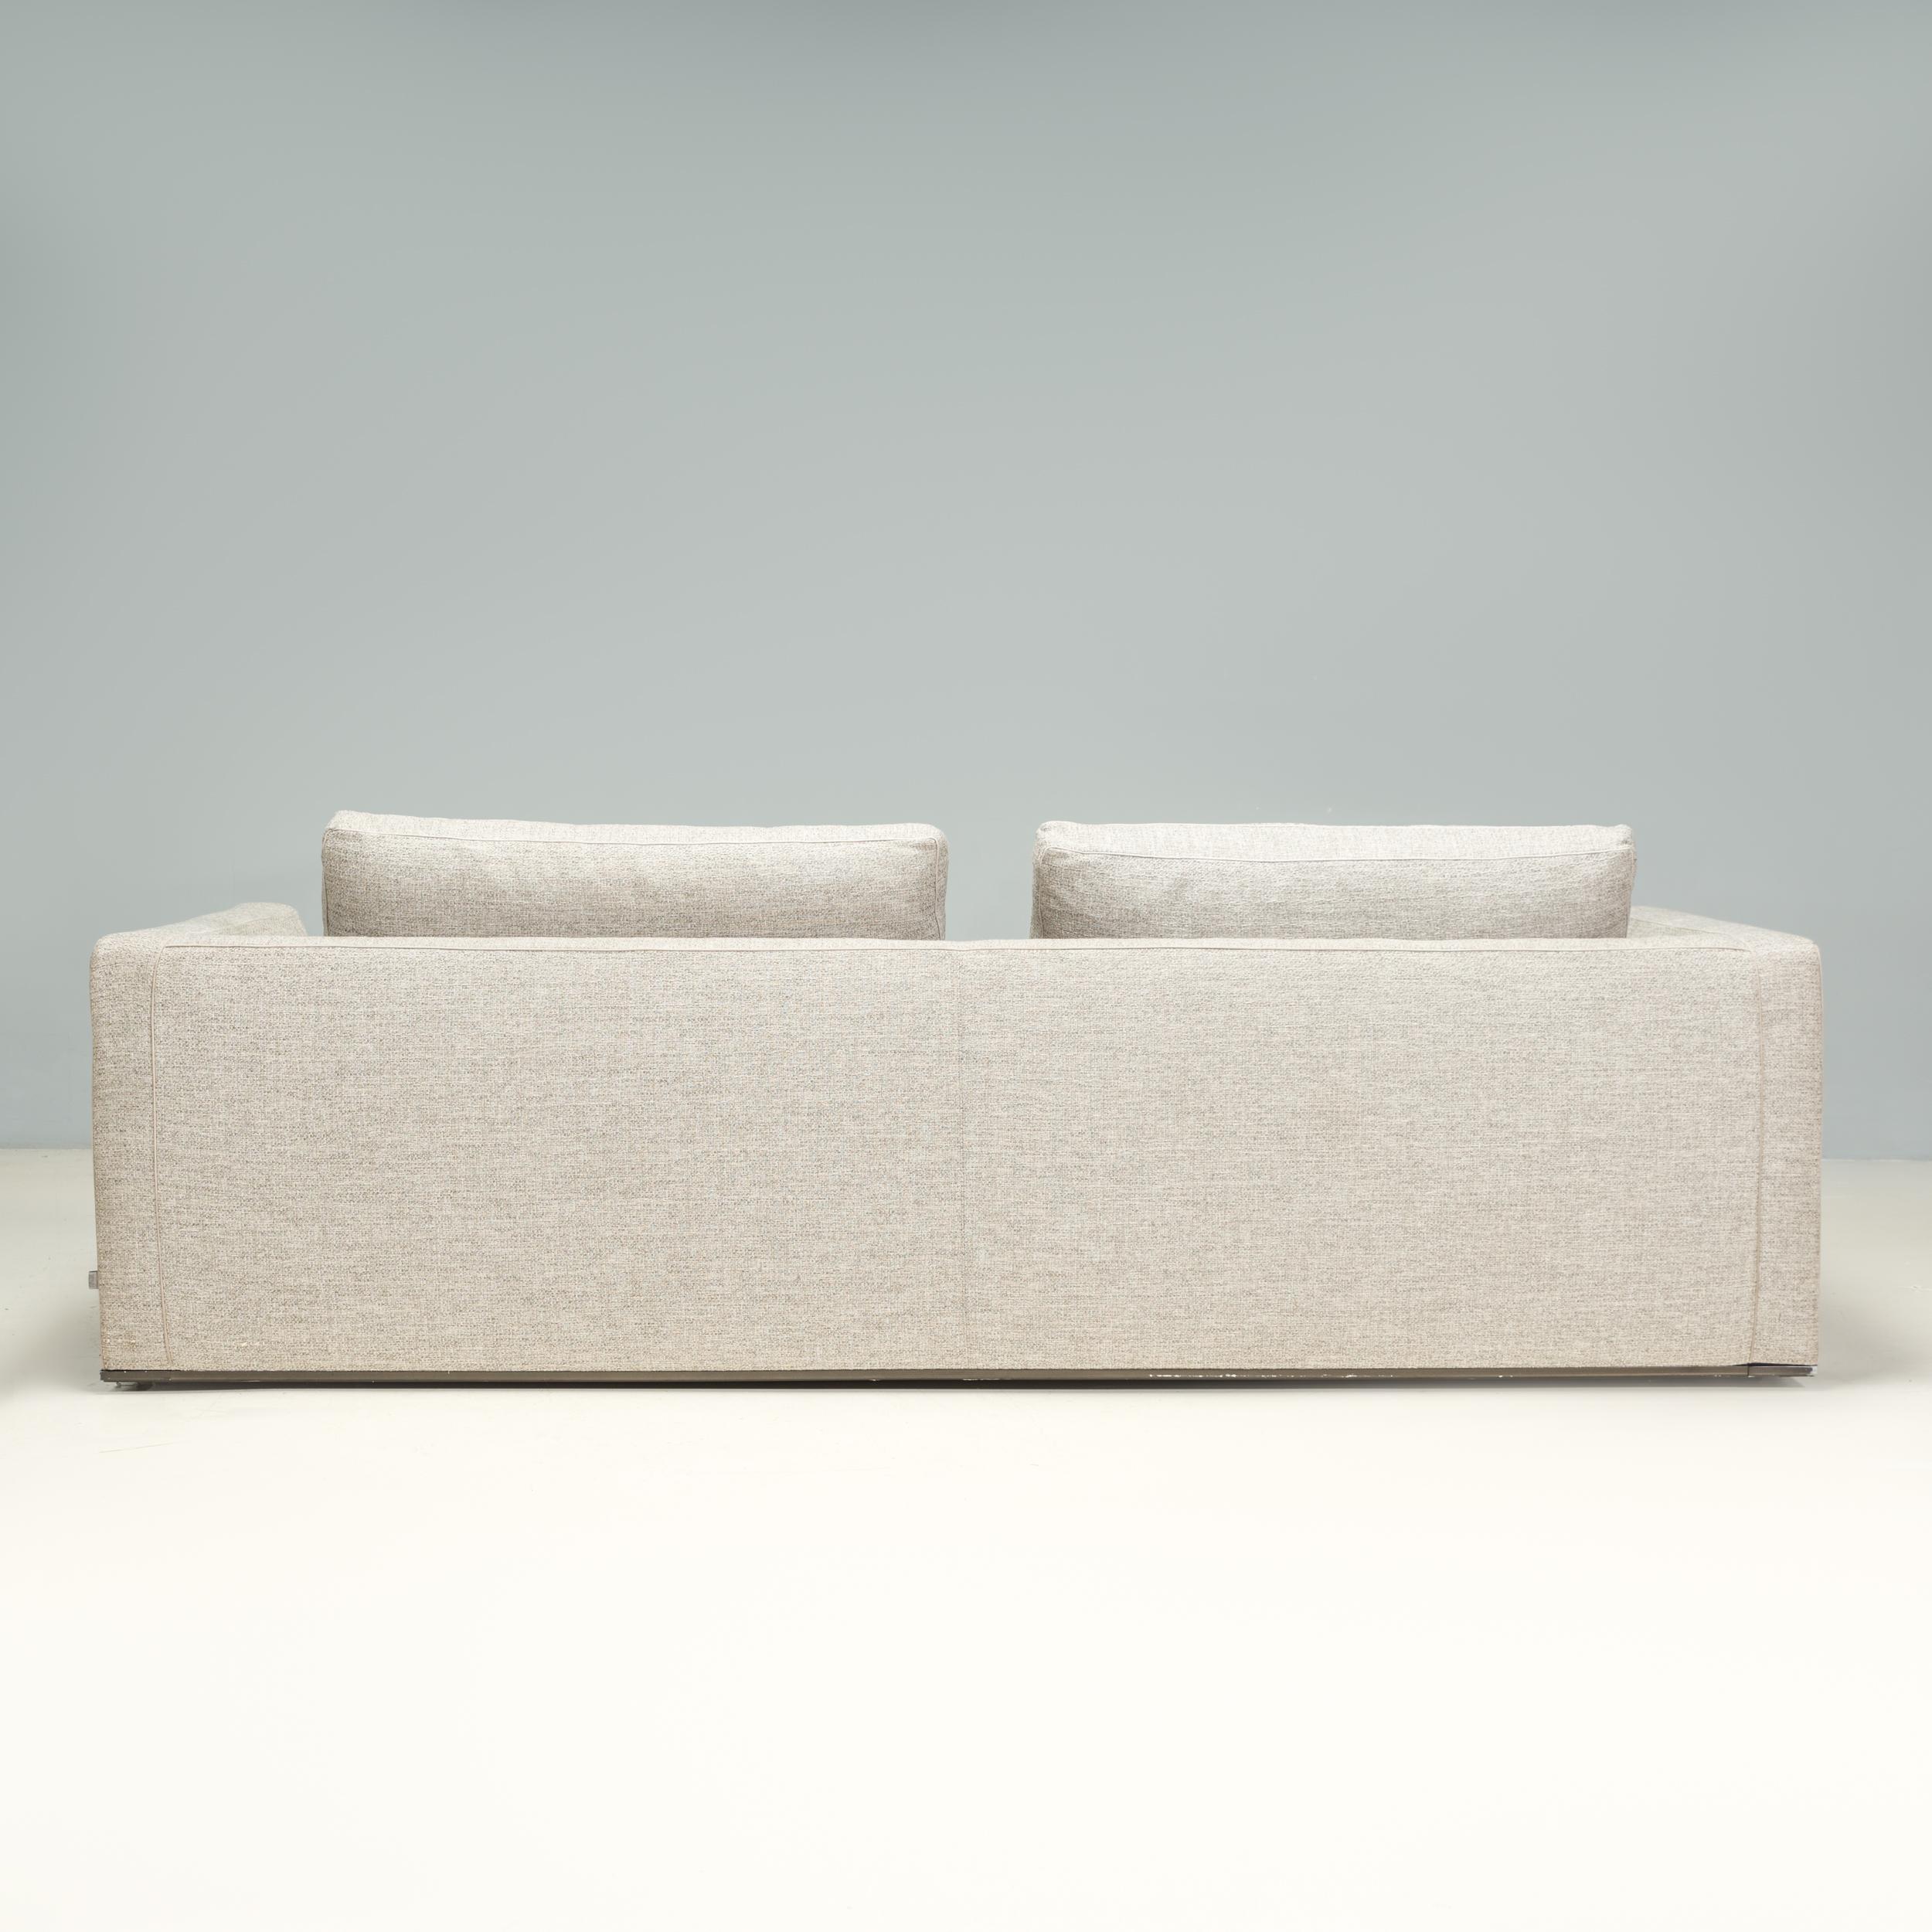 Italian Antonio Citterio for B&B Italia Richard Fabric Two Seat Sofa For Sale